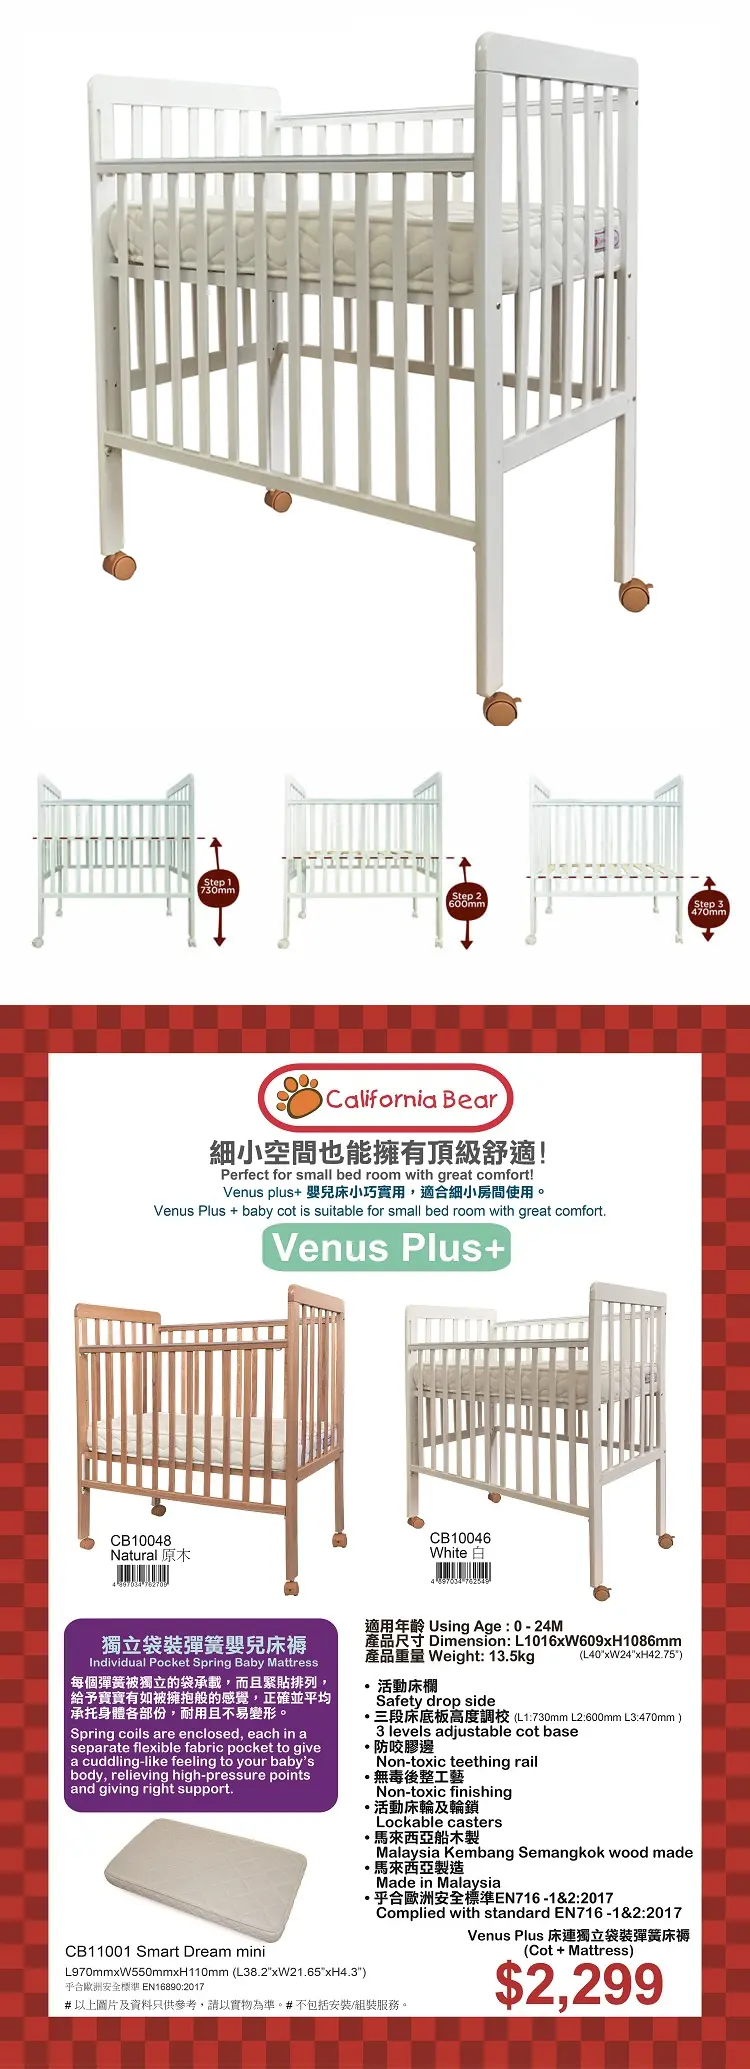 California Bear Venus Plus+ 婴儿木床